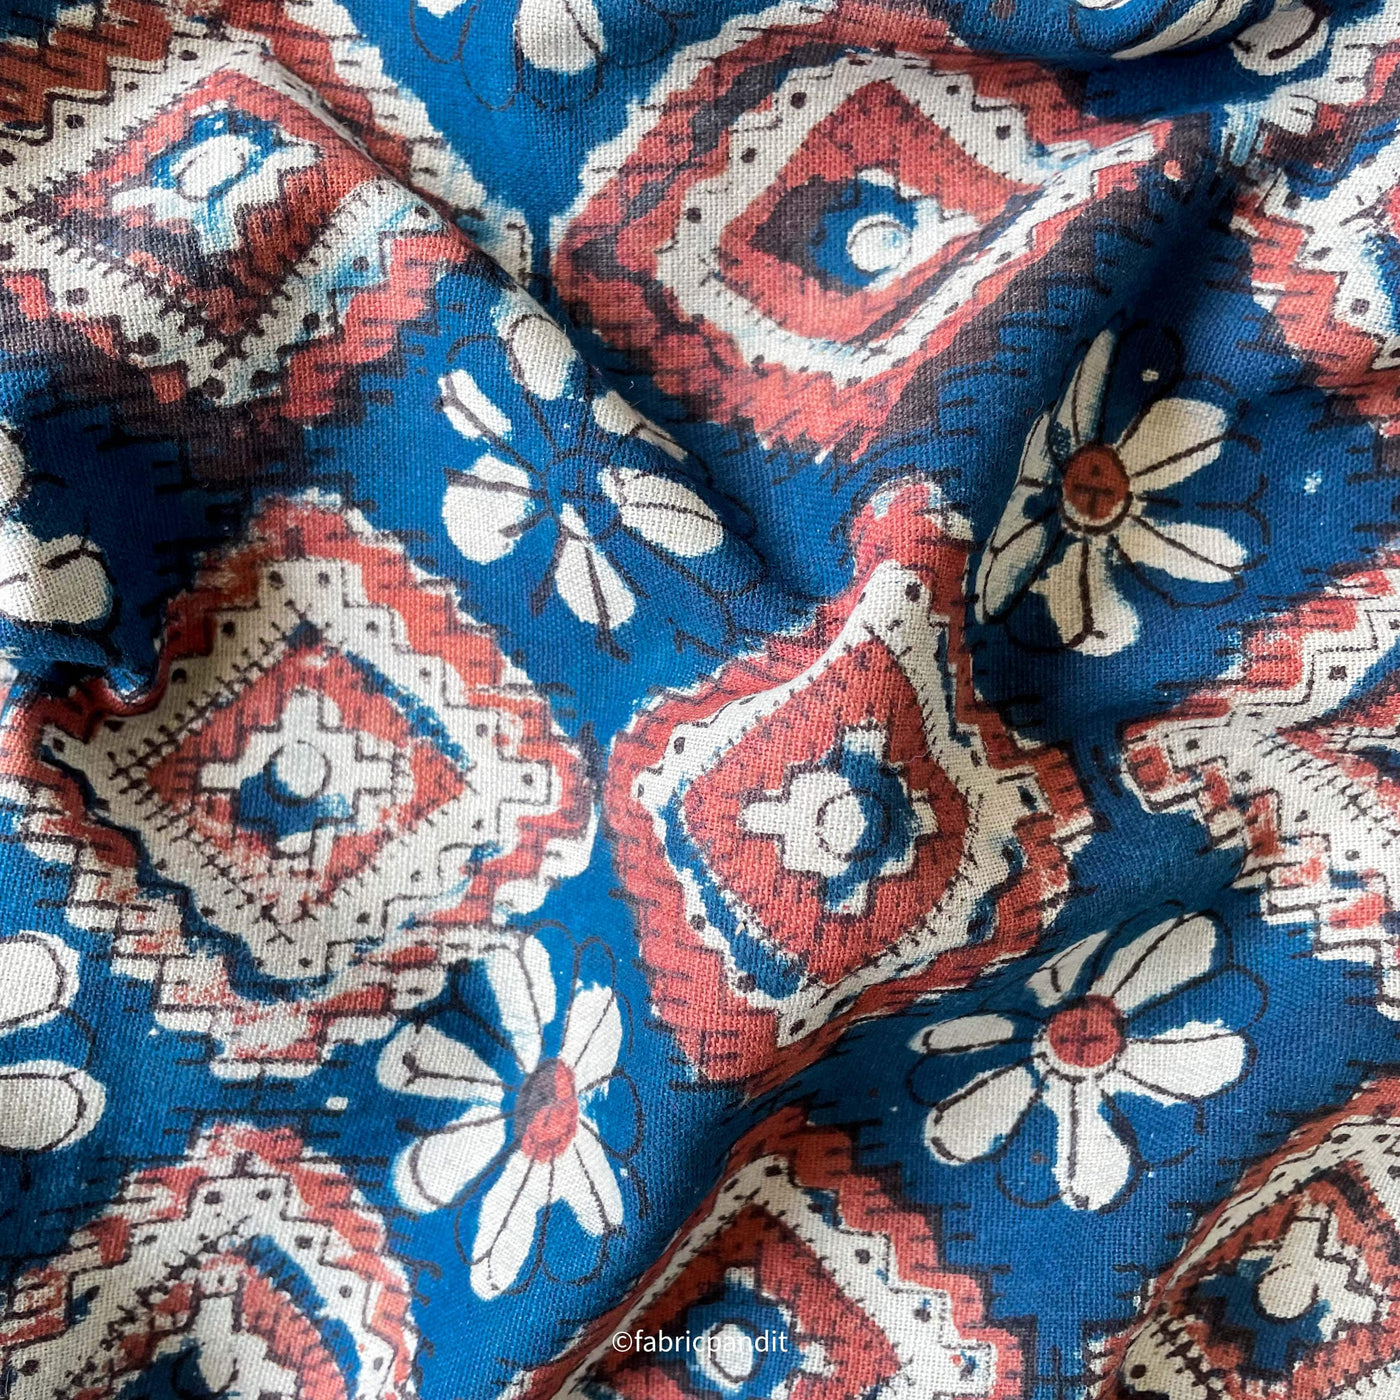 Printed Cotton Linen Fabric Cut Piece (CUT PIECE) Indigo Blue & Red Geometric & Floral Hand Block Printed Pure Cotton Linen Fabric (Width 42 inches)